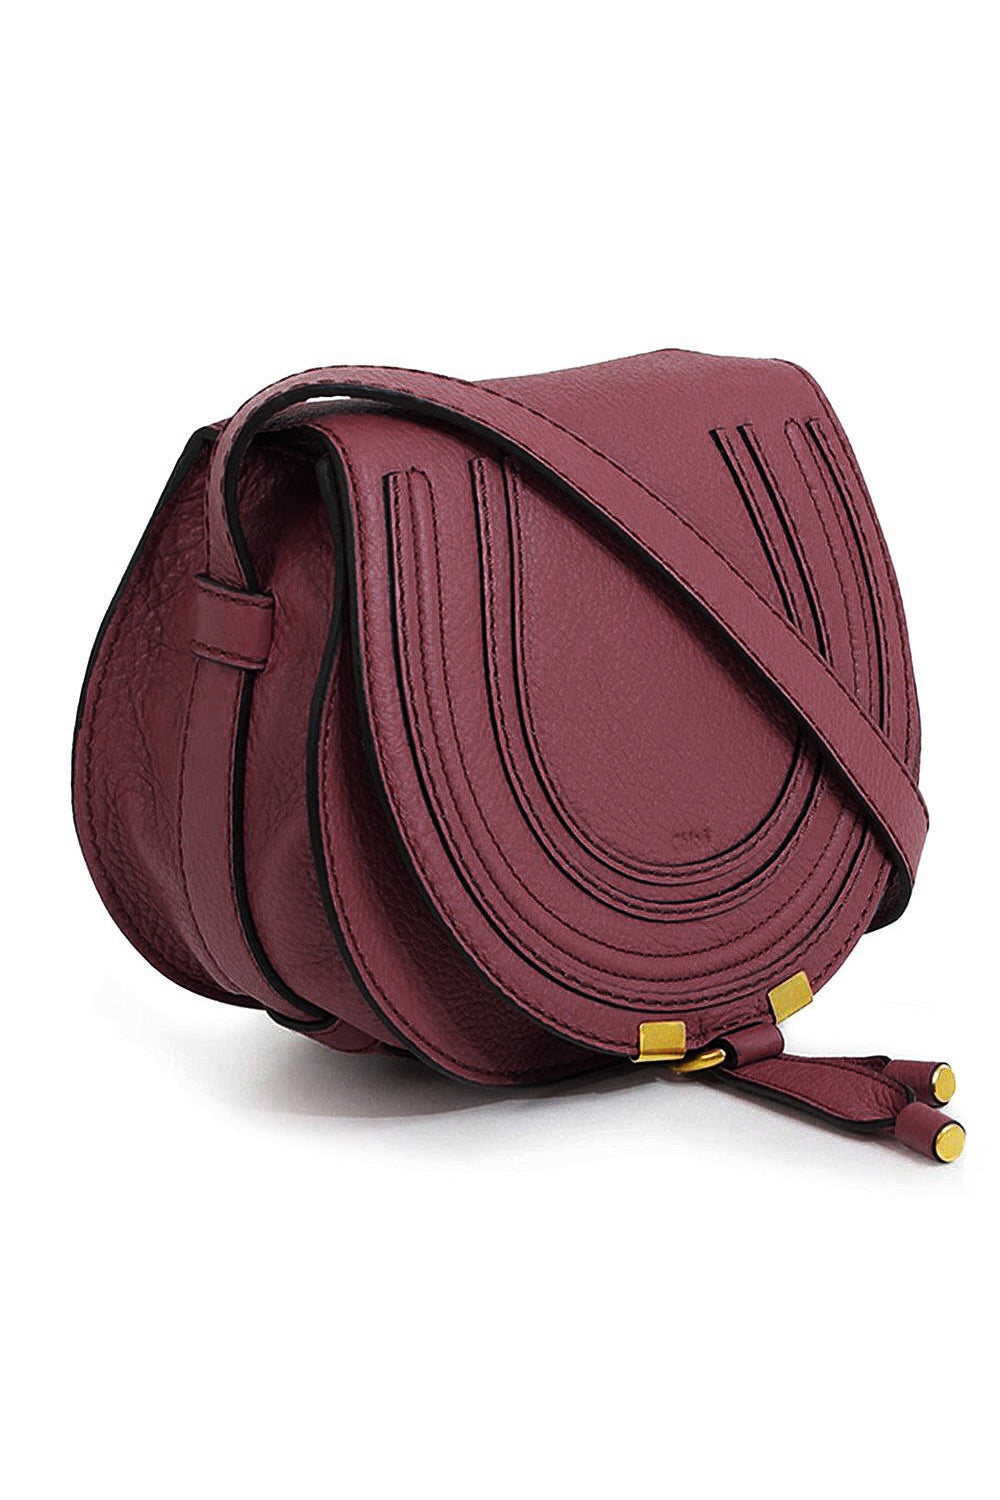 CHLOE BAGS RED MARCIE SMALL BAG | BURGUNDY